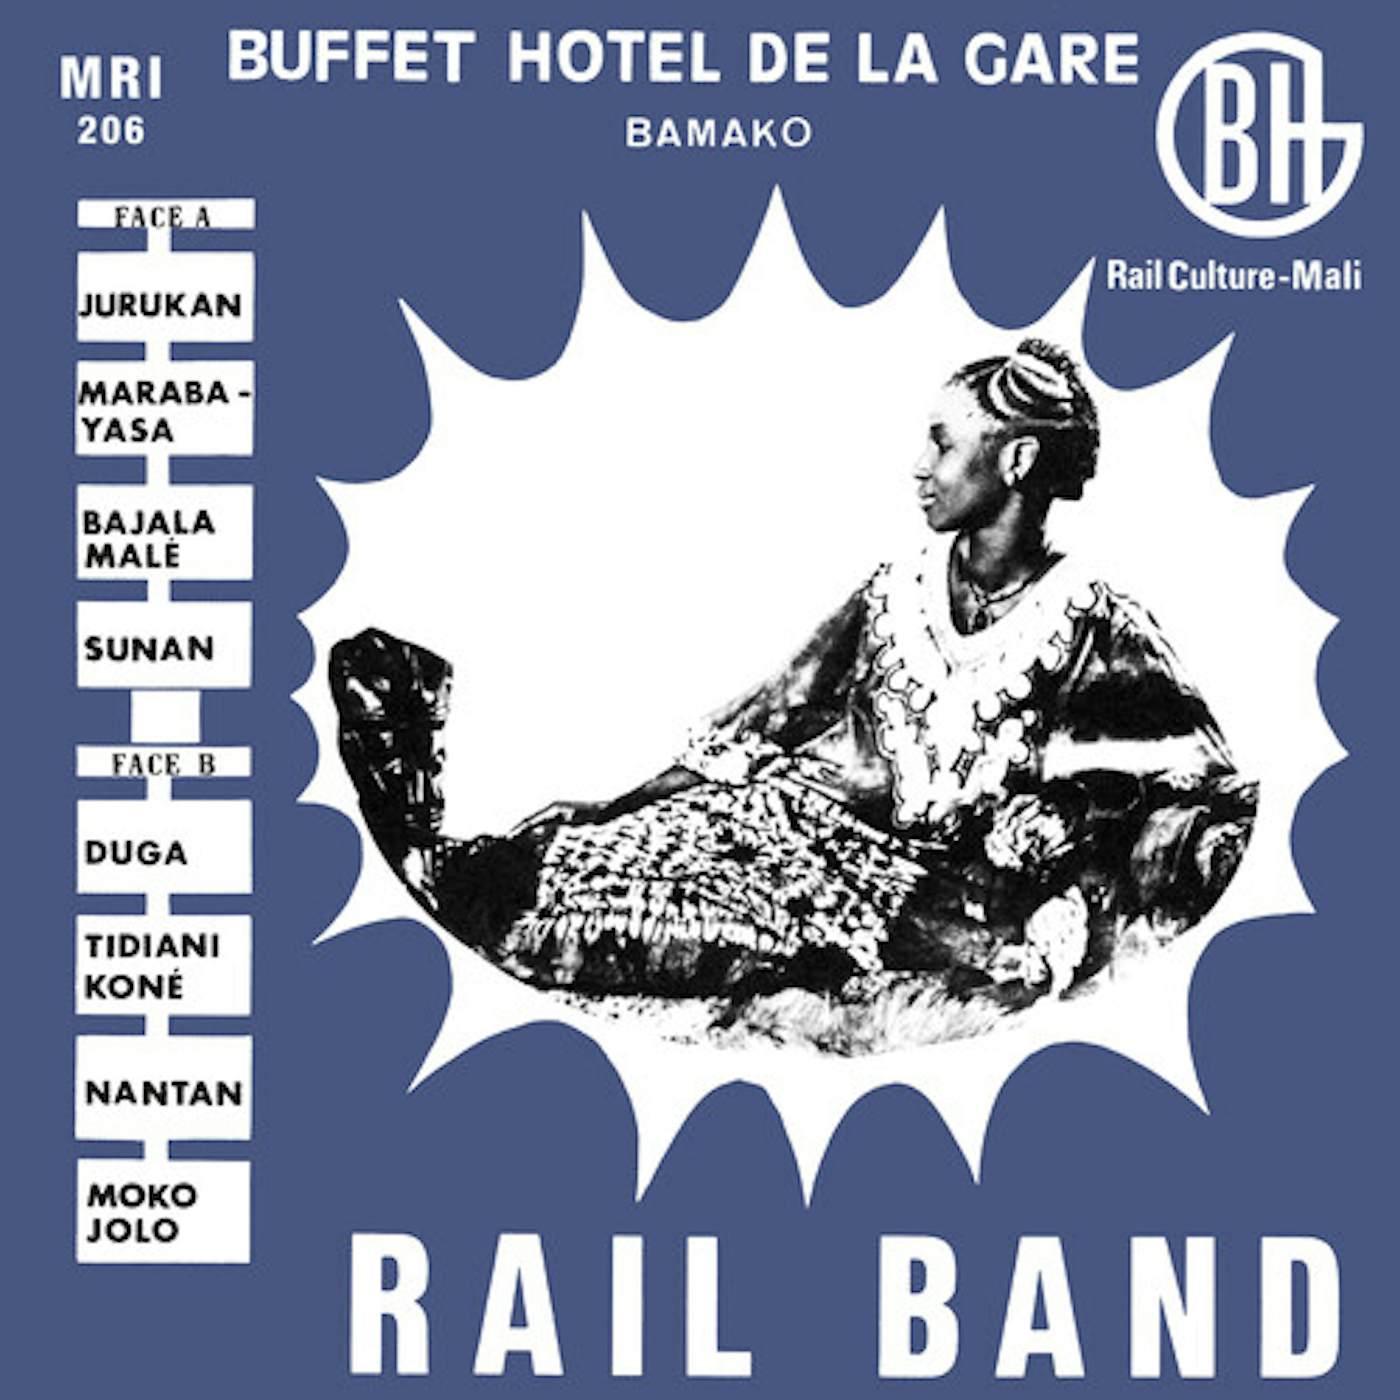 Rail Band Vinyl Record